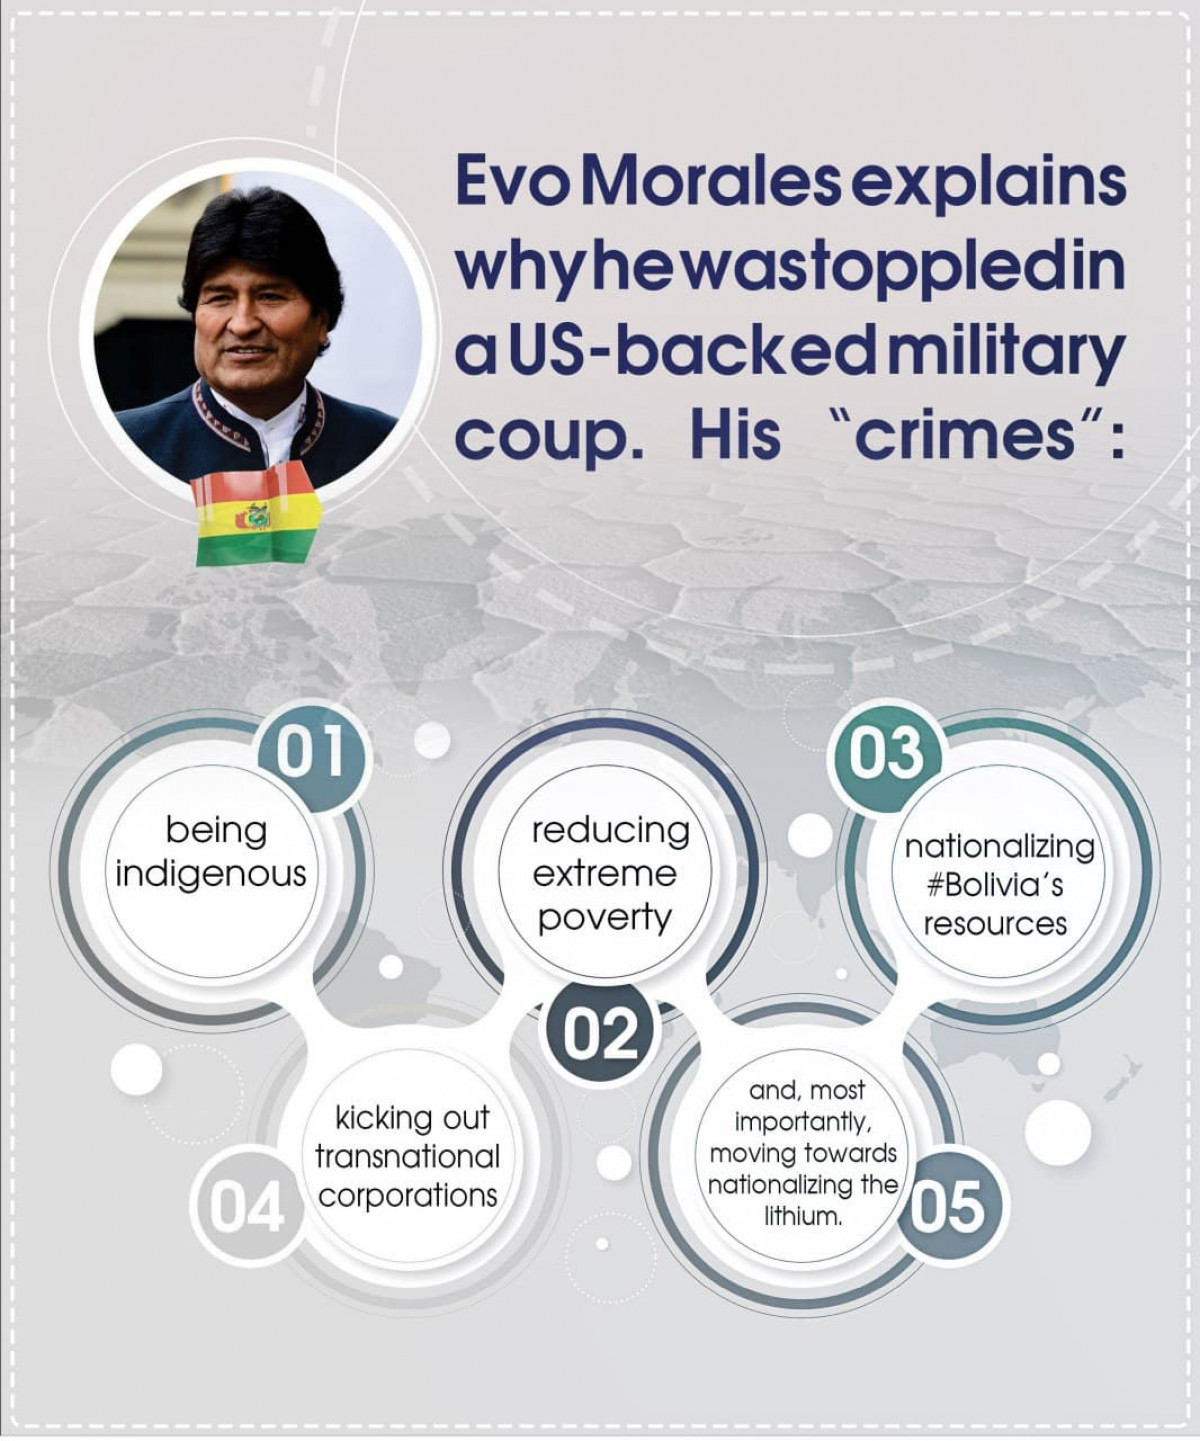 Evo Morales explains whyhewastoppledin a US-backed military coup